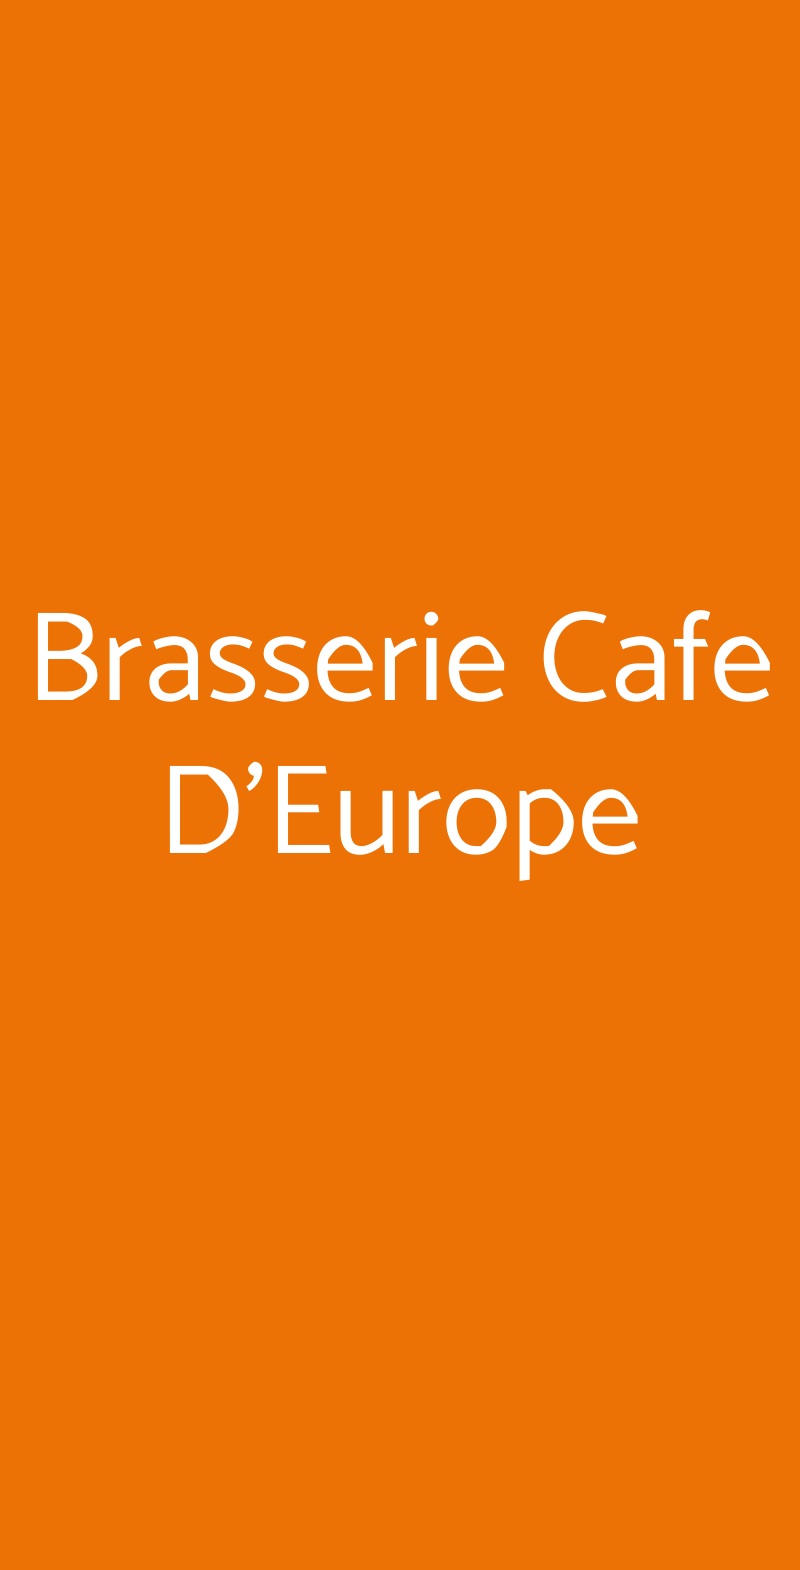 Brasserie Cafe D'Europe Aosta menù 1 pagina